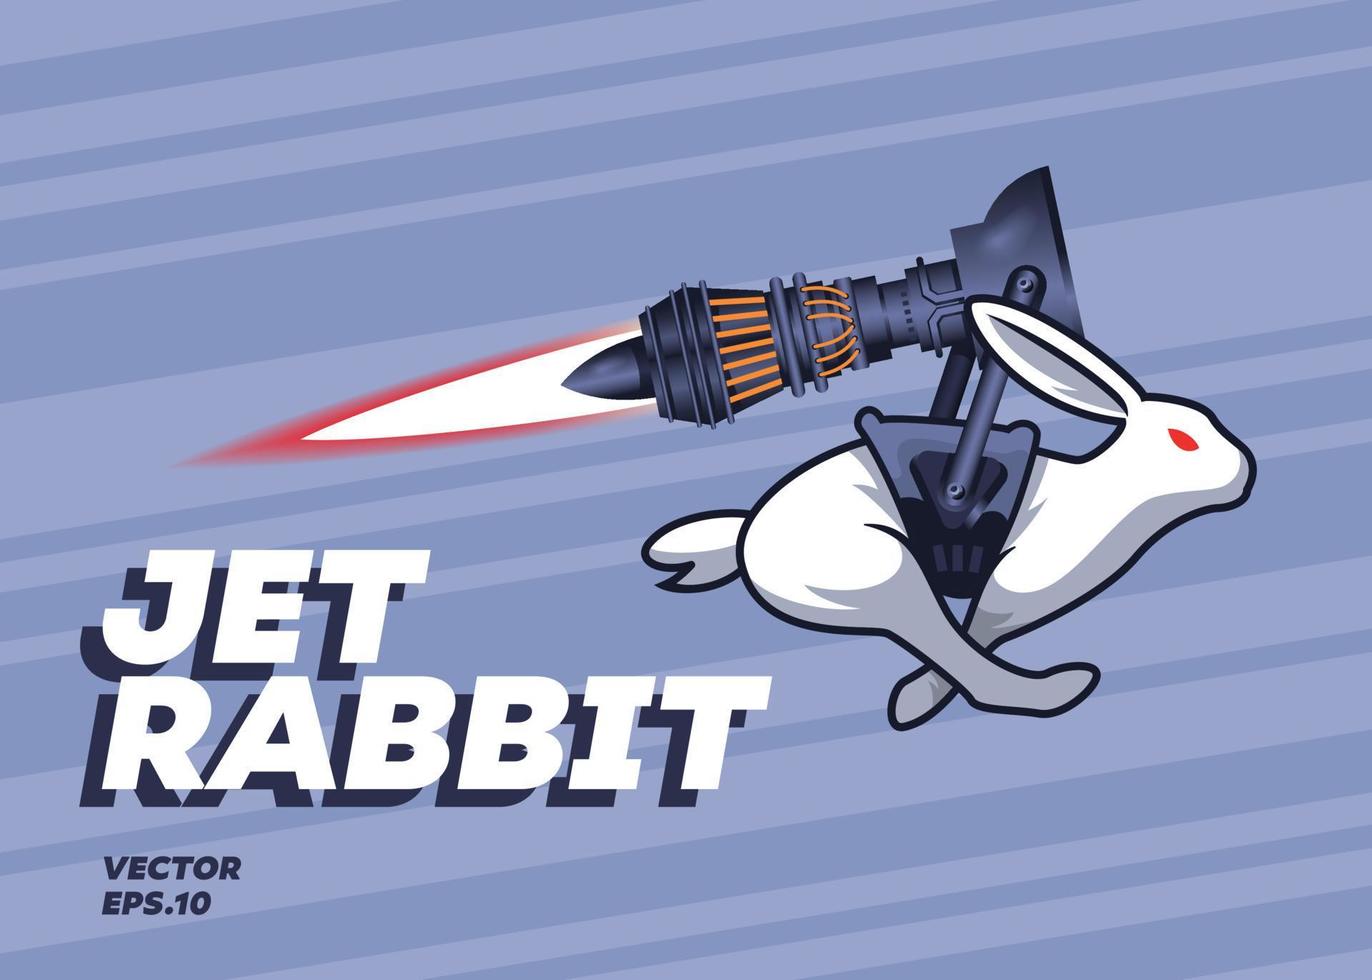 Jet Rabbit Engine vector